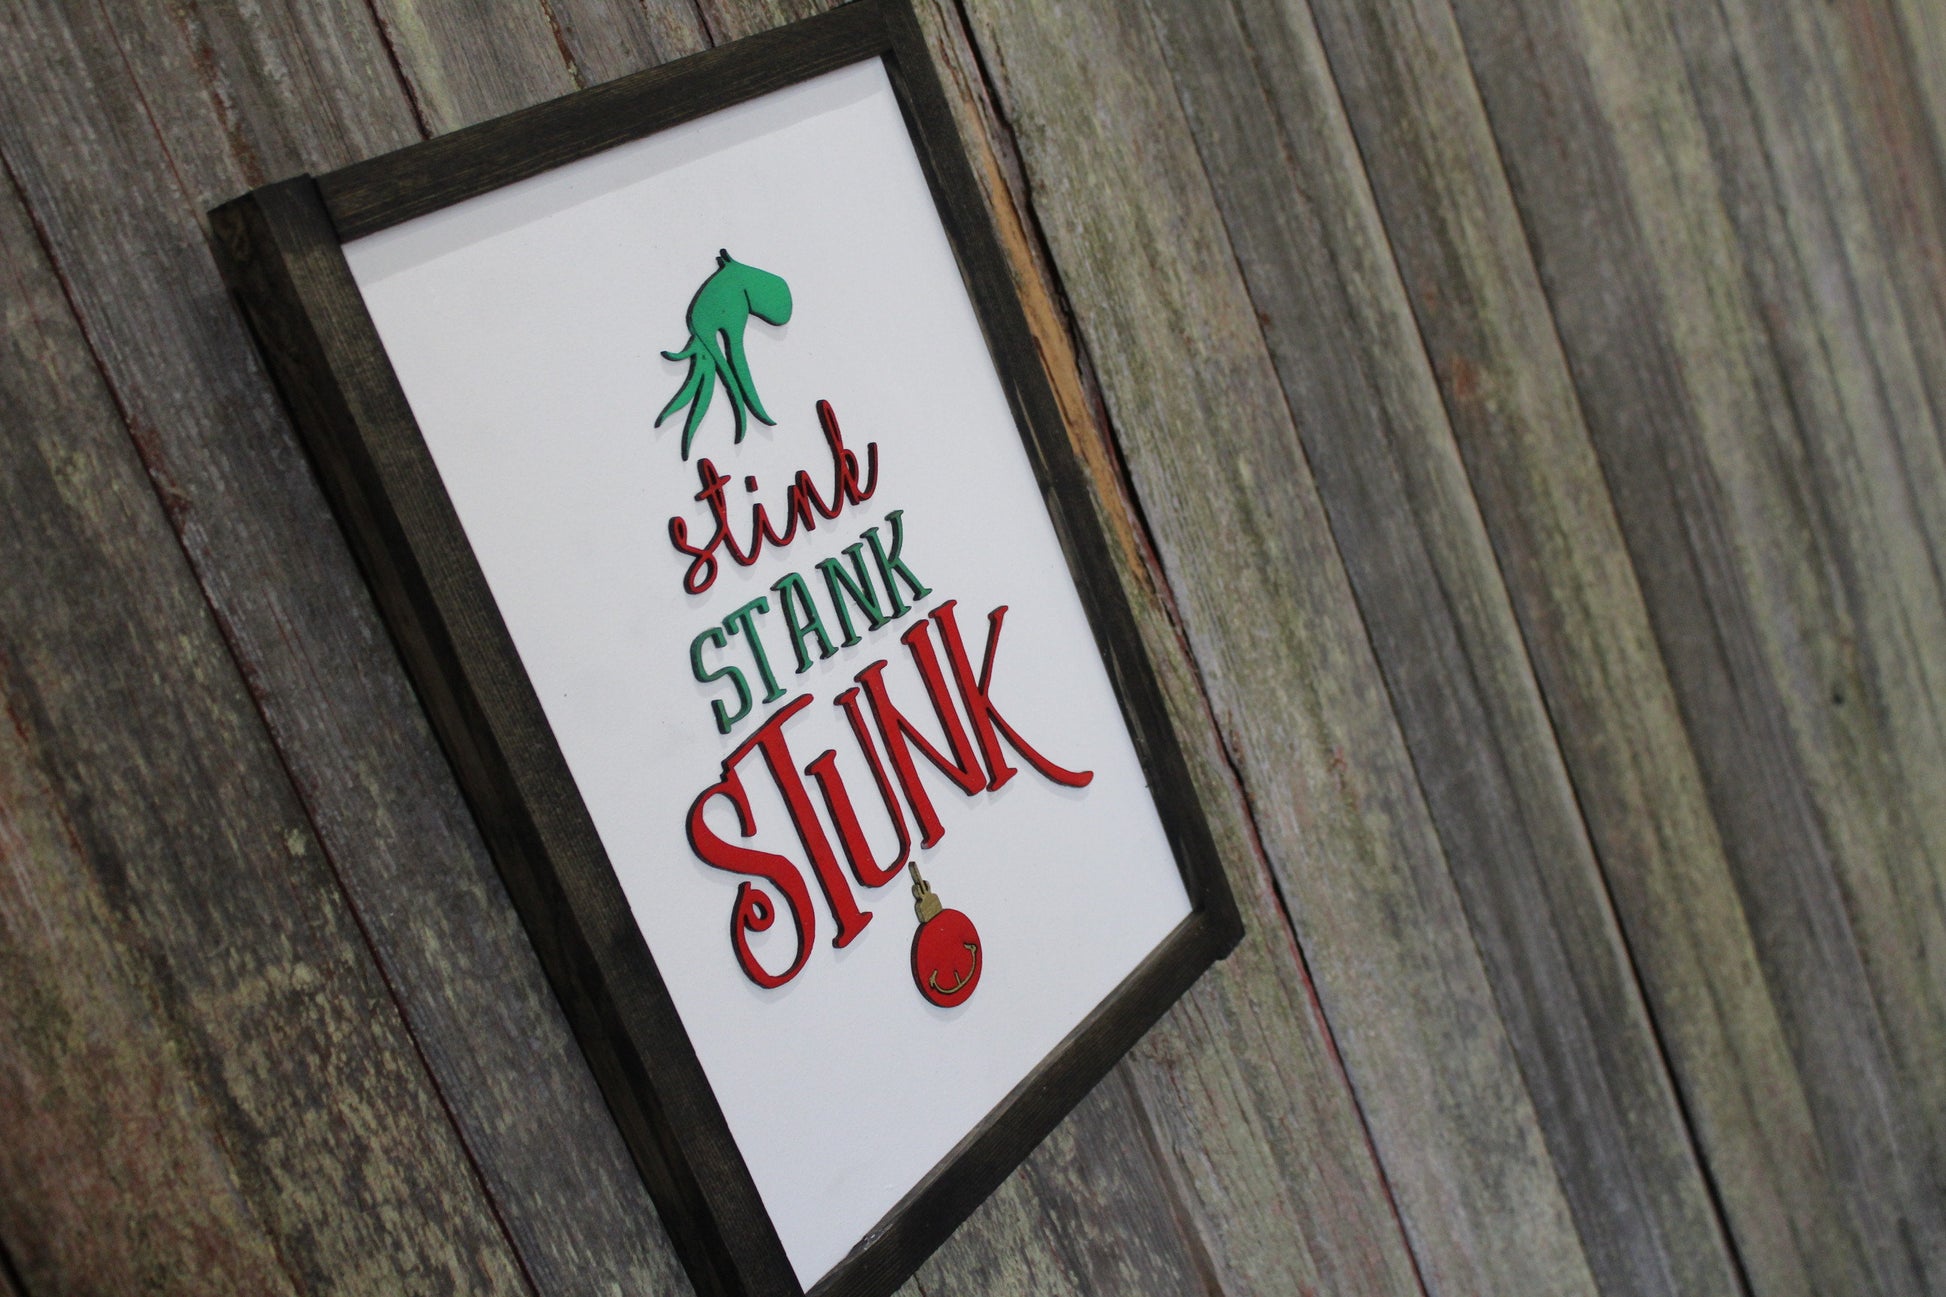 Stink Stank Stunk Sign Raised 3D Wood Mean One Christmas Décor Decoration Wall Art Farmhouse Rustic Primitive Fingers Smile Hand Festive